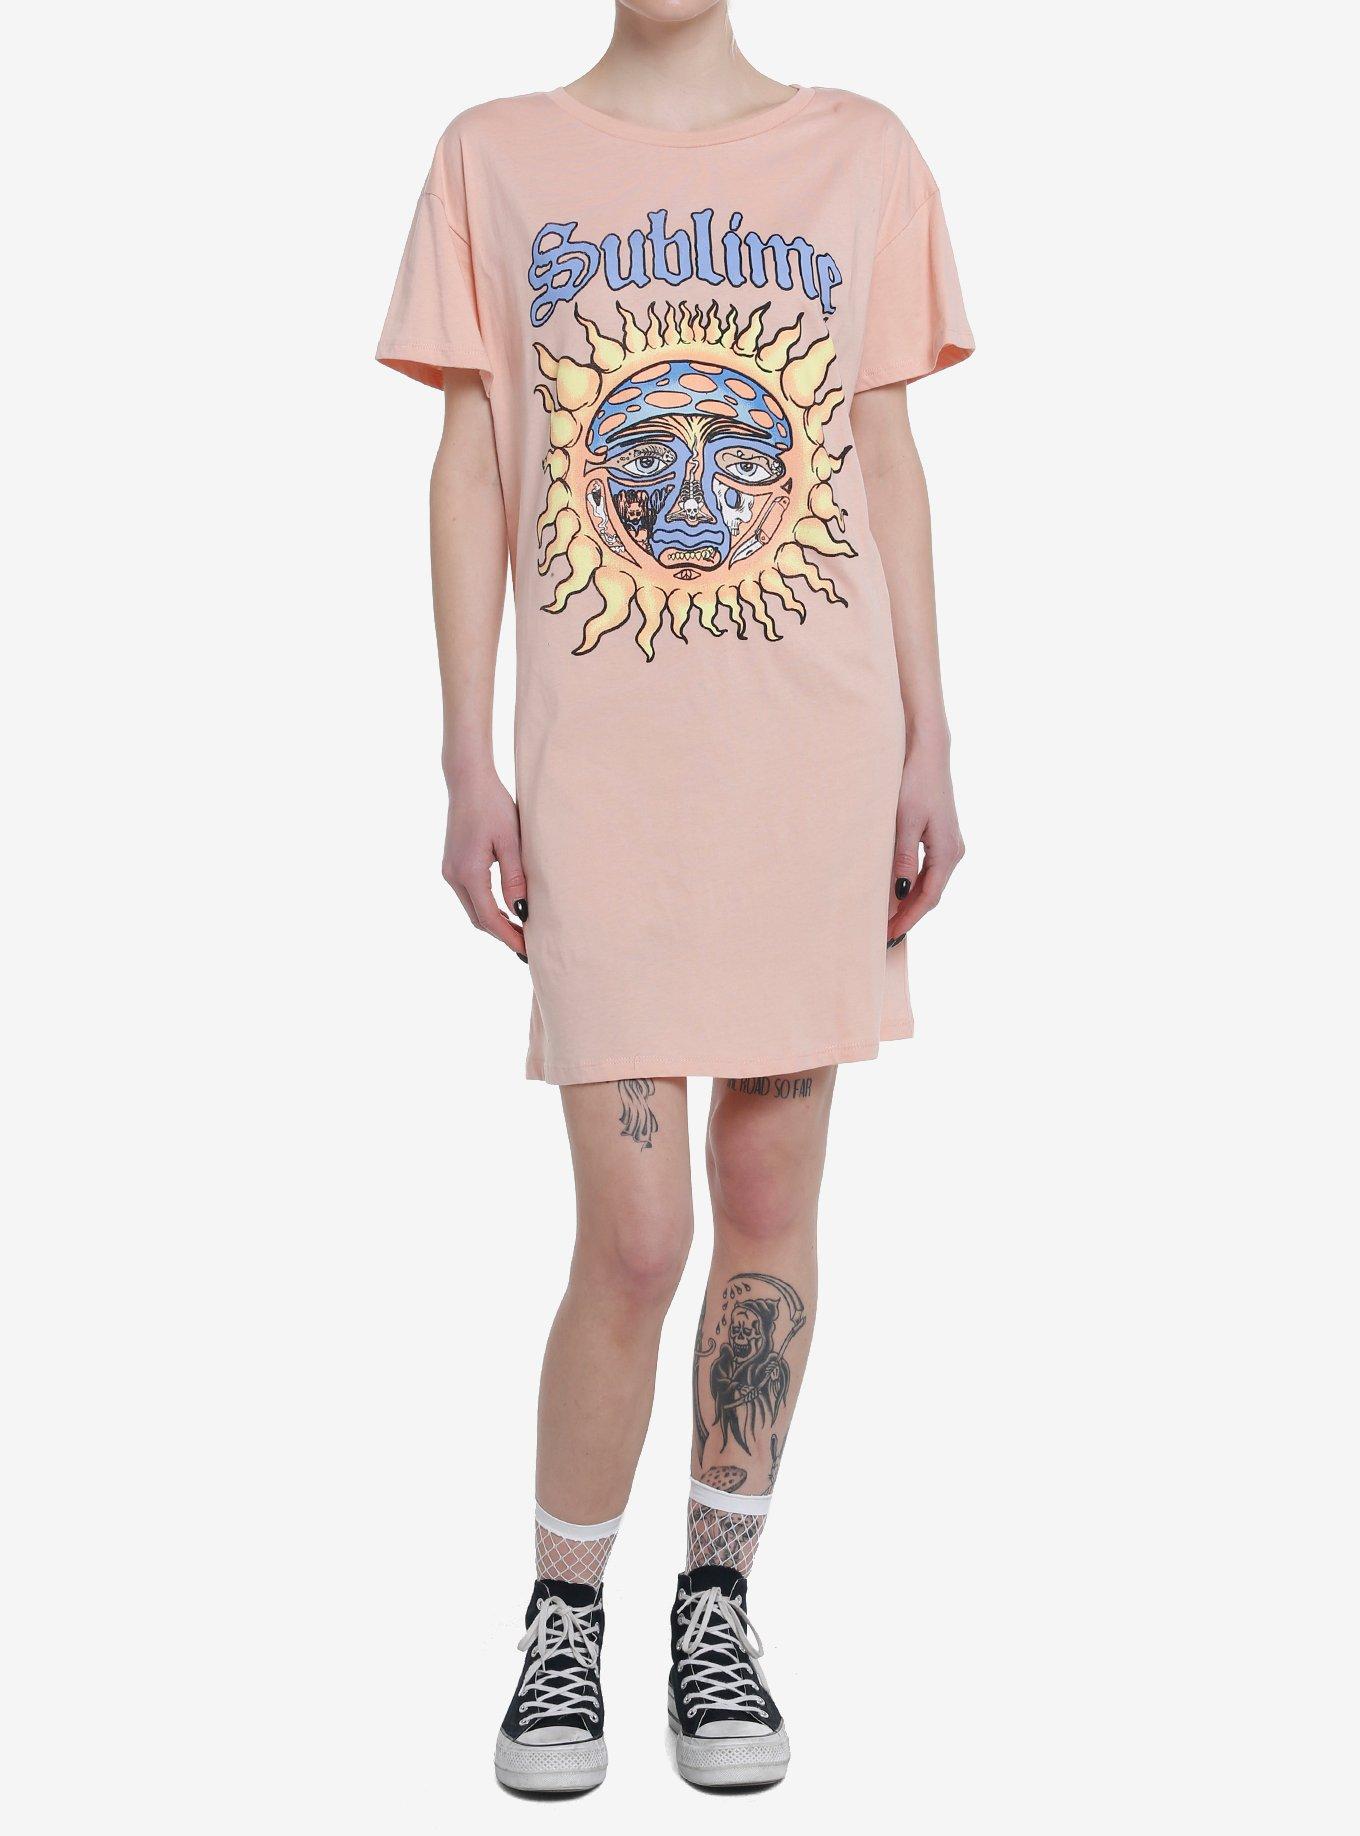 Sublime Sun Logo T-Shirt Dress, MAUVE, alternate